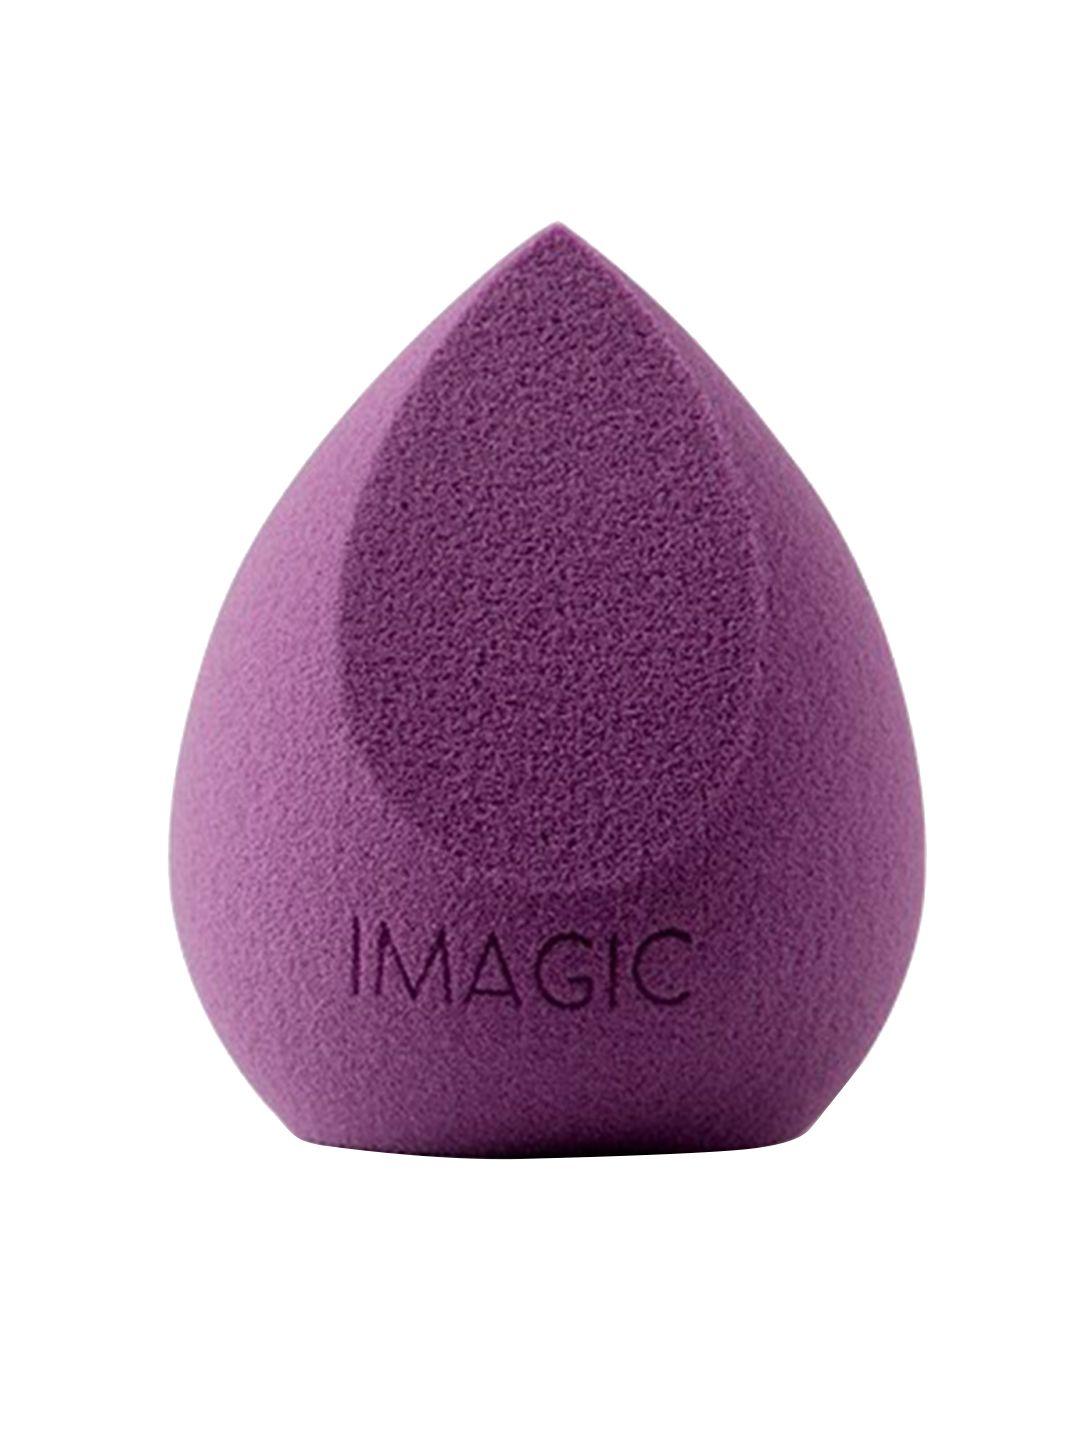 imagic professional cosmetics tl435-16 non latex makeup sponge - purple